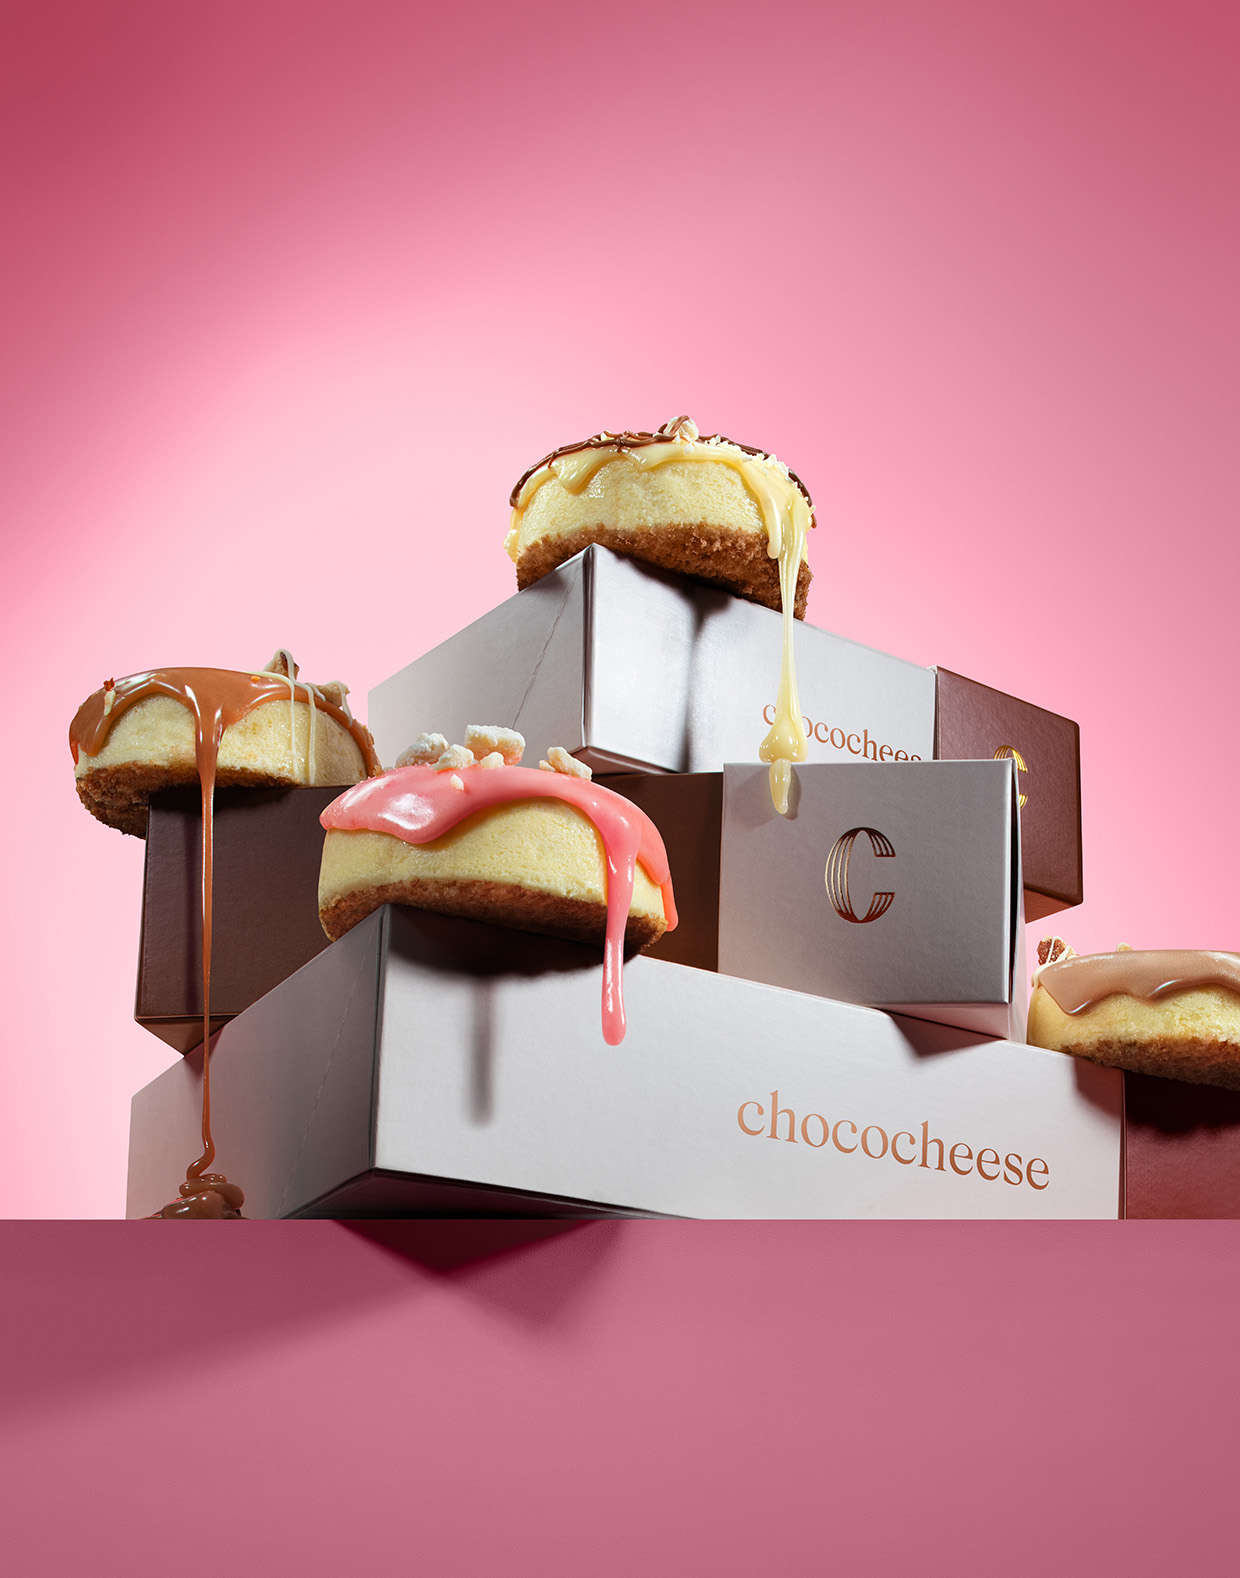 New-york-fodd-studio-chcocheese-donuts-stack